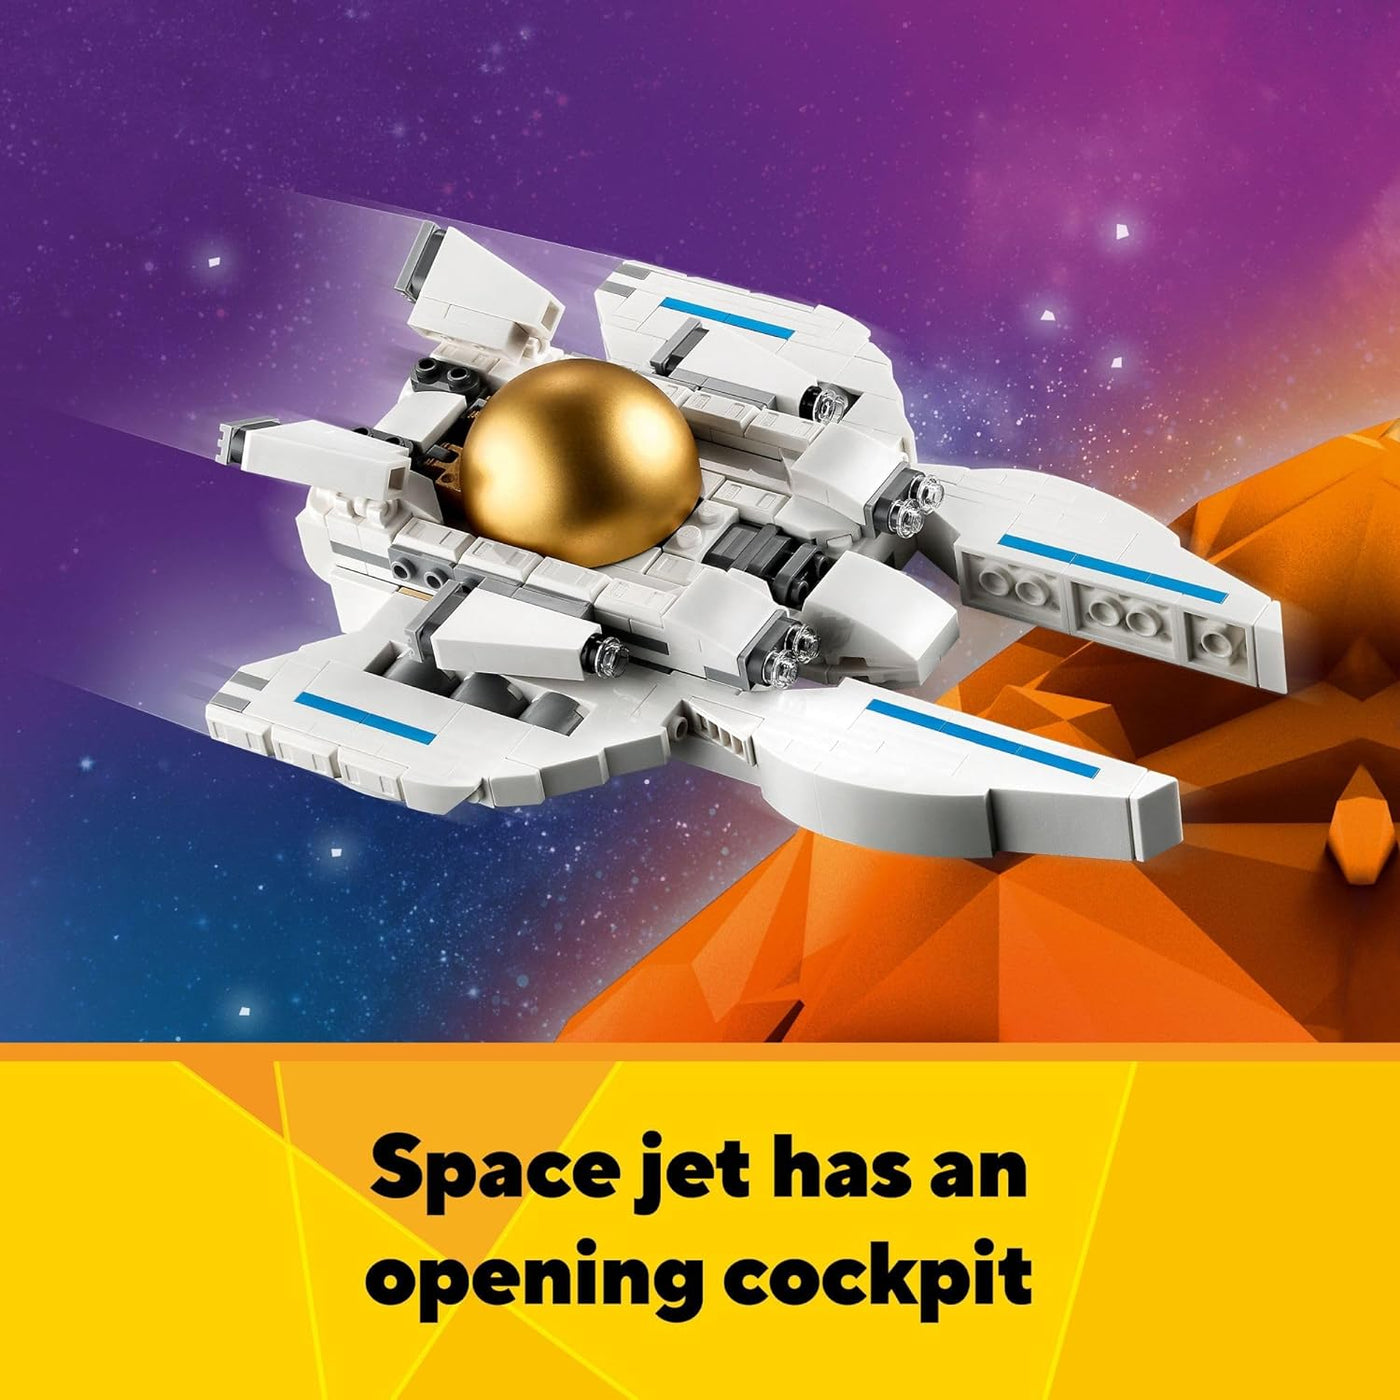 LEGO® Creator 3 In 1 #31152: Space Astronaut